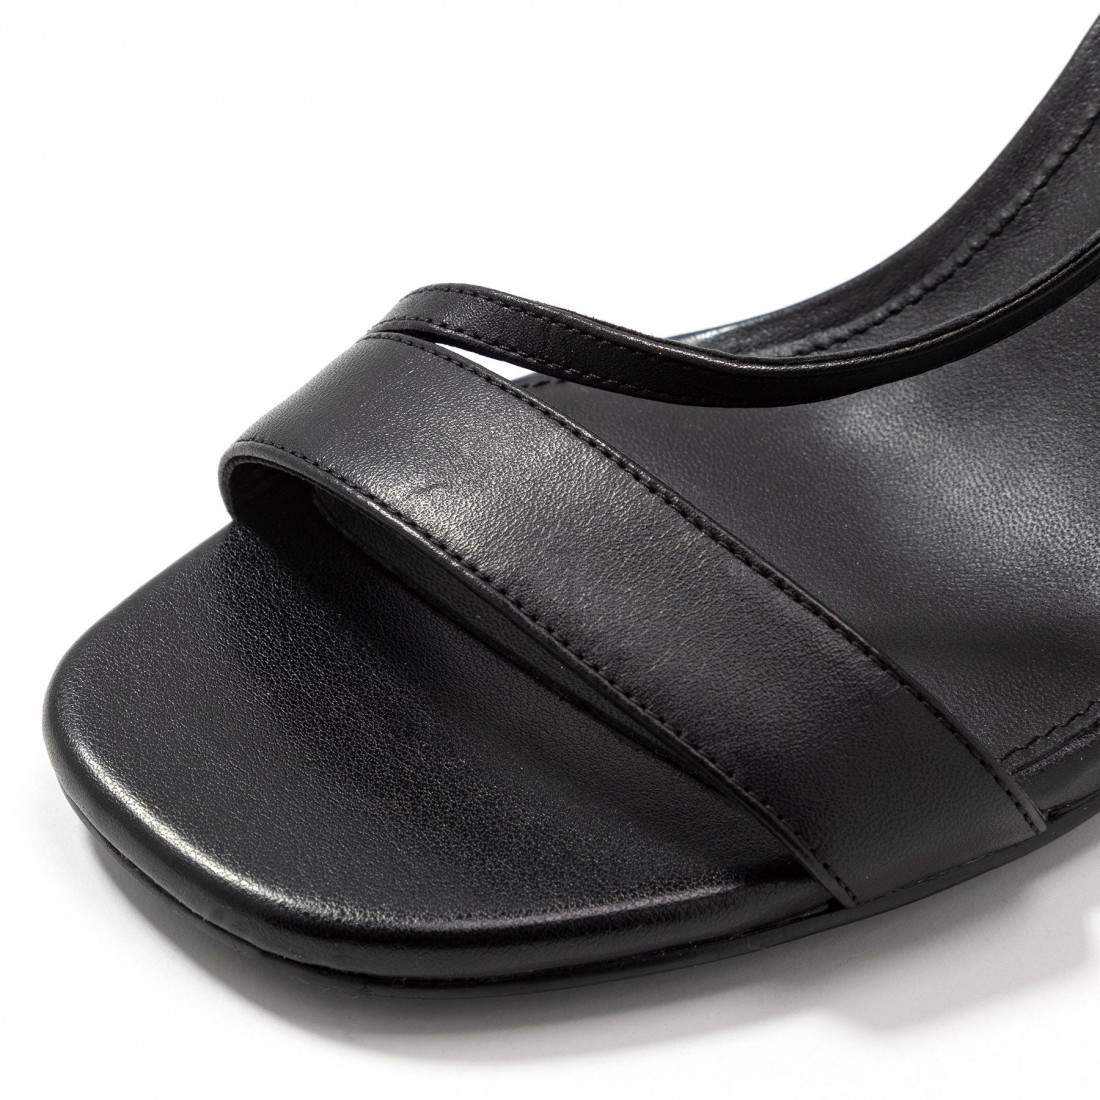 Sandalo con tacco Michael Kors Tasha nero in pelle